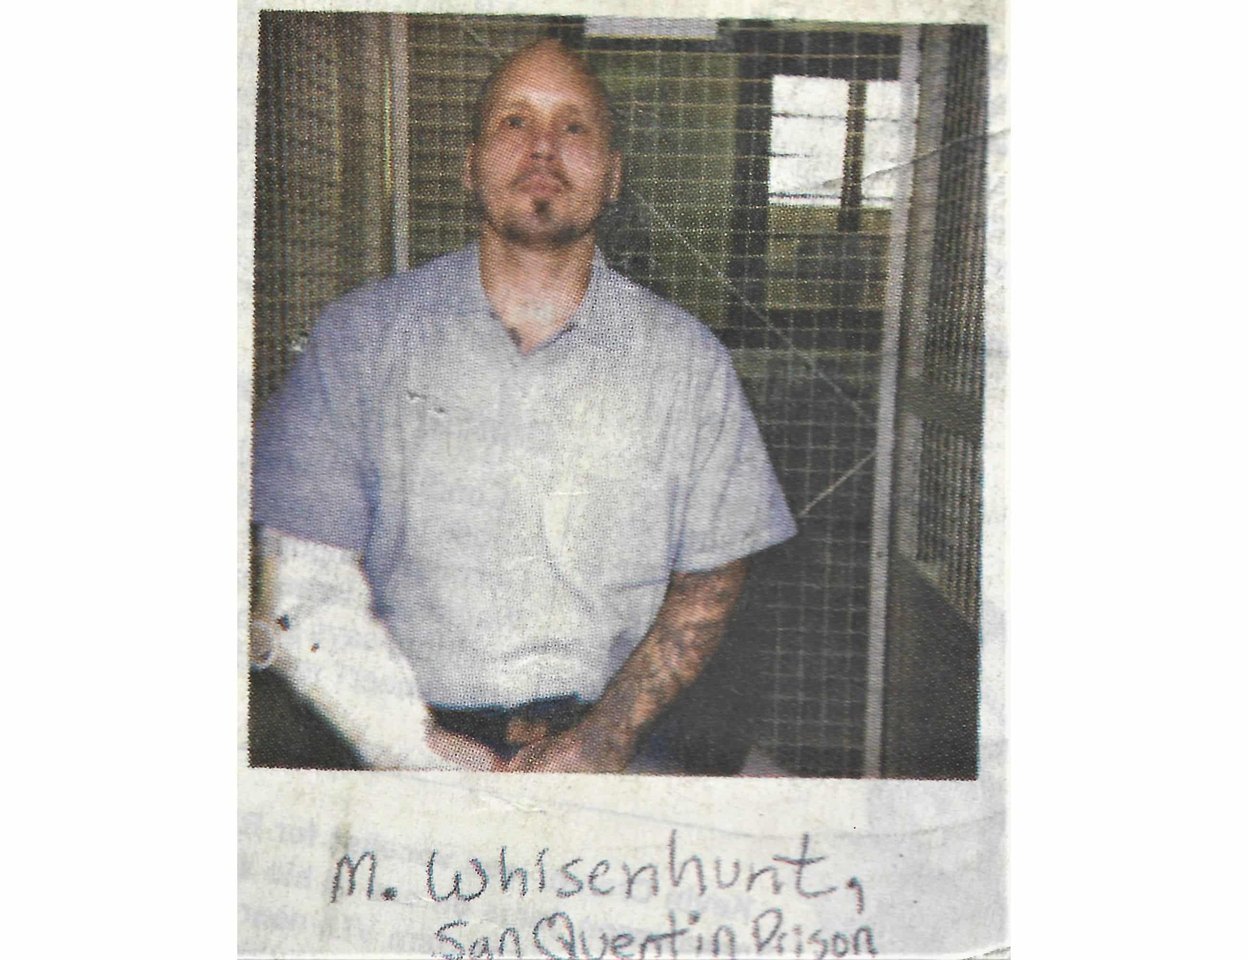 California death row inmate Michael Whisenhunt.